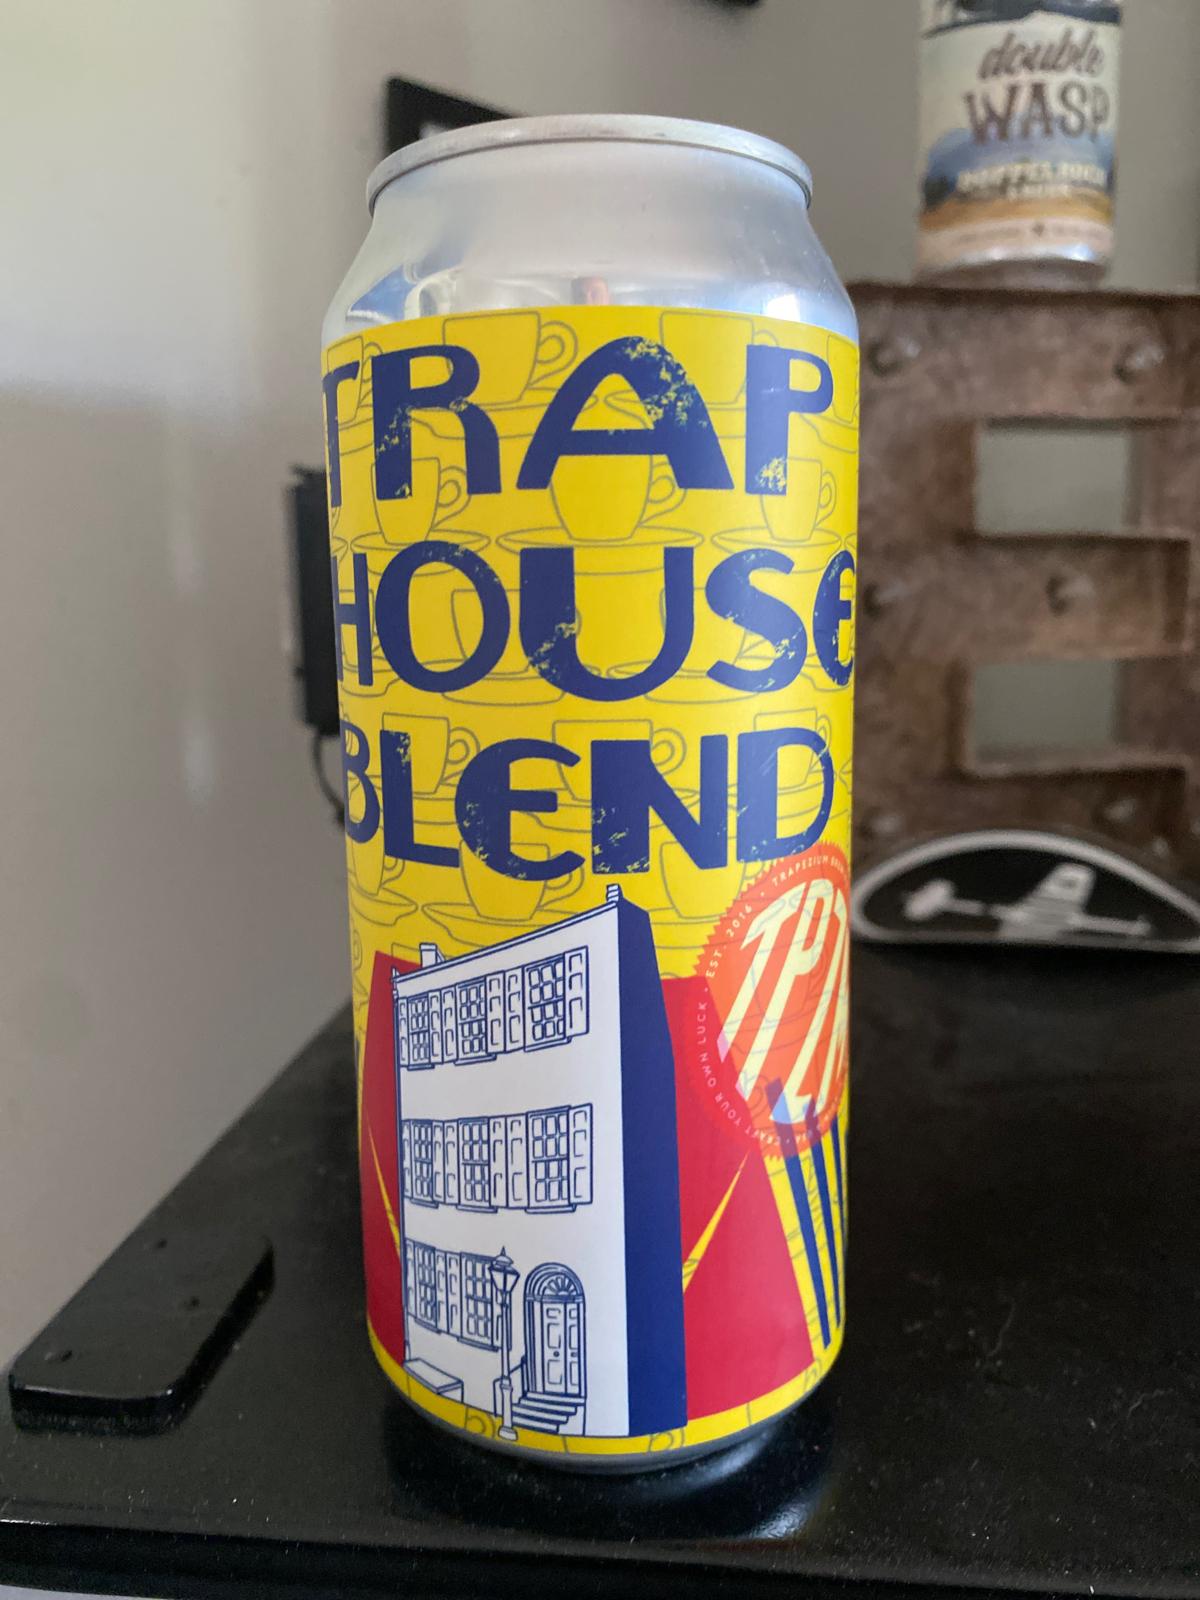 Trap House Blend